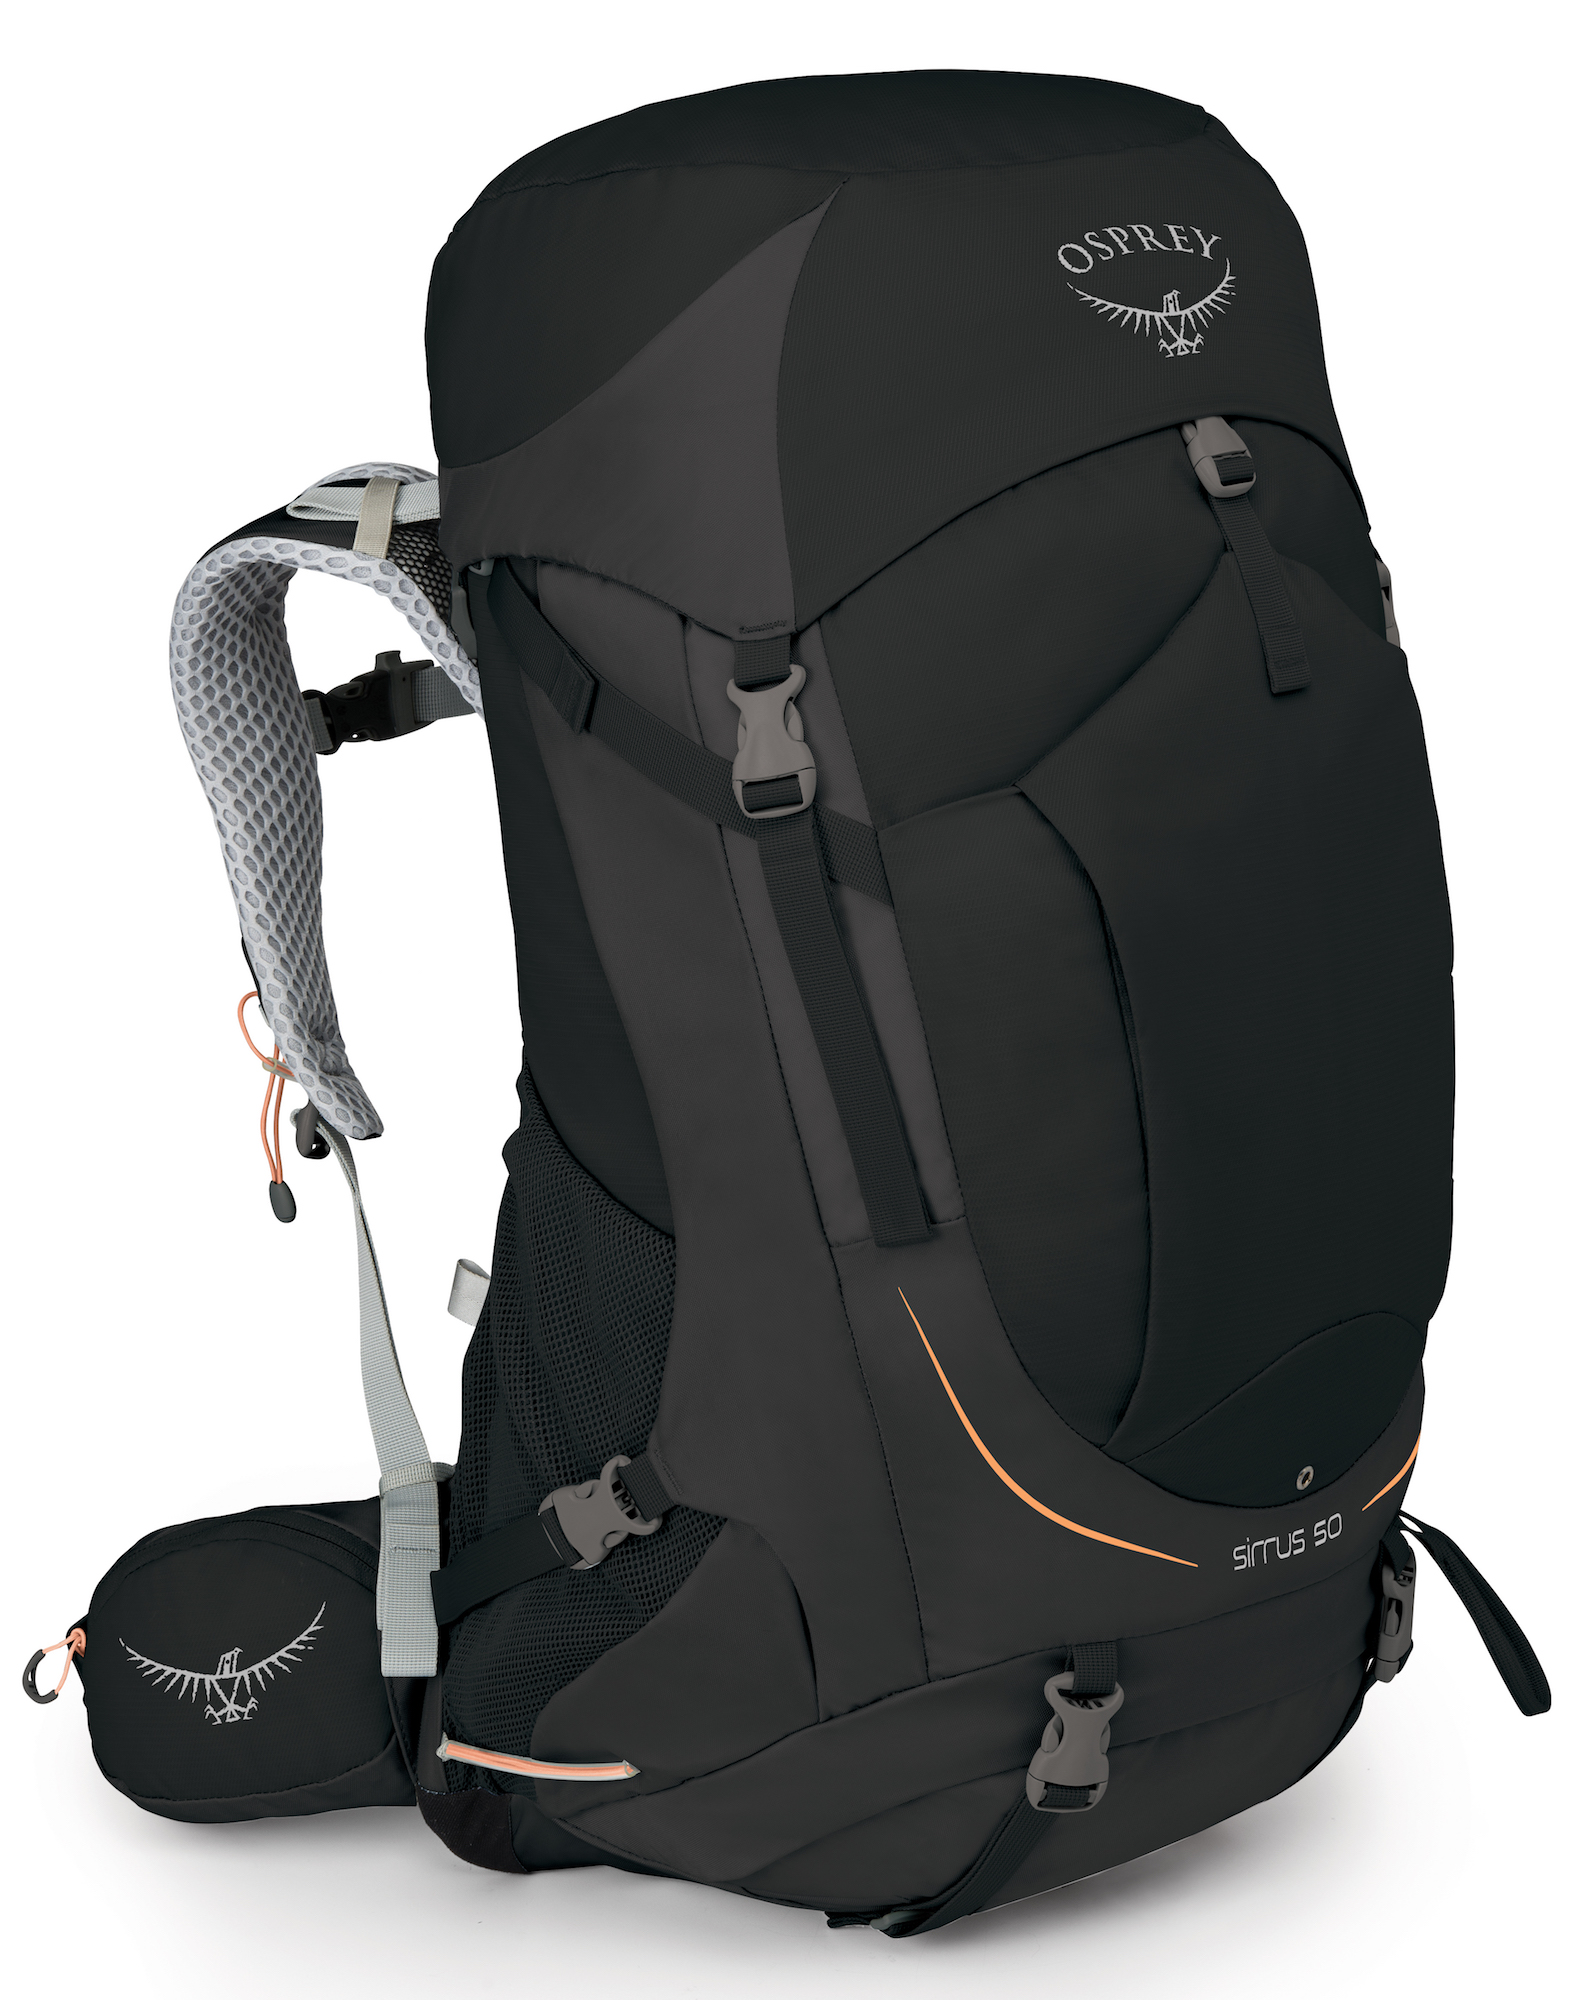 Osprey - Sirrus 50 - Backpack - Women's